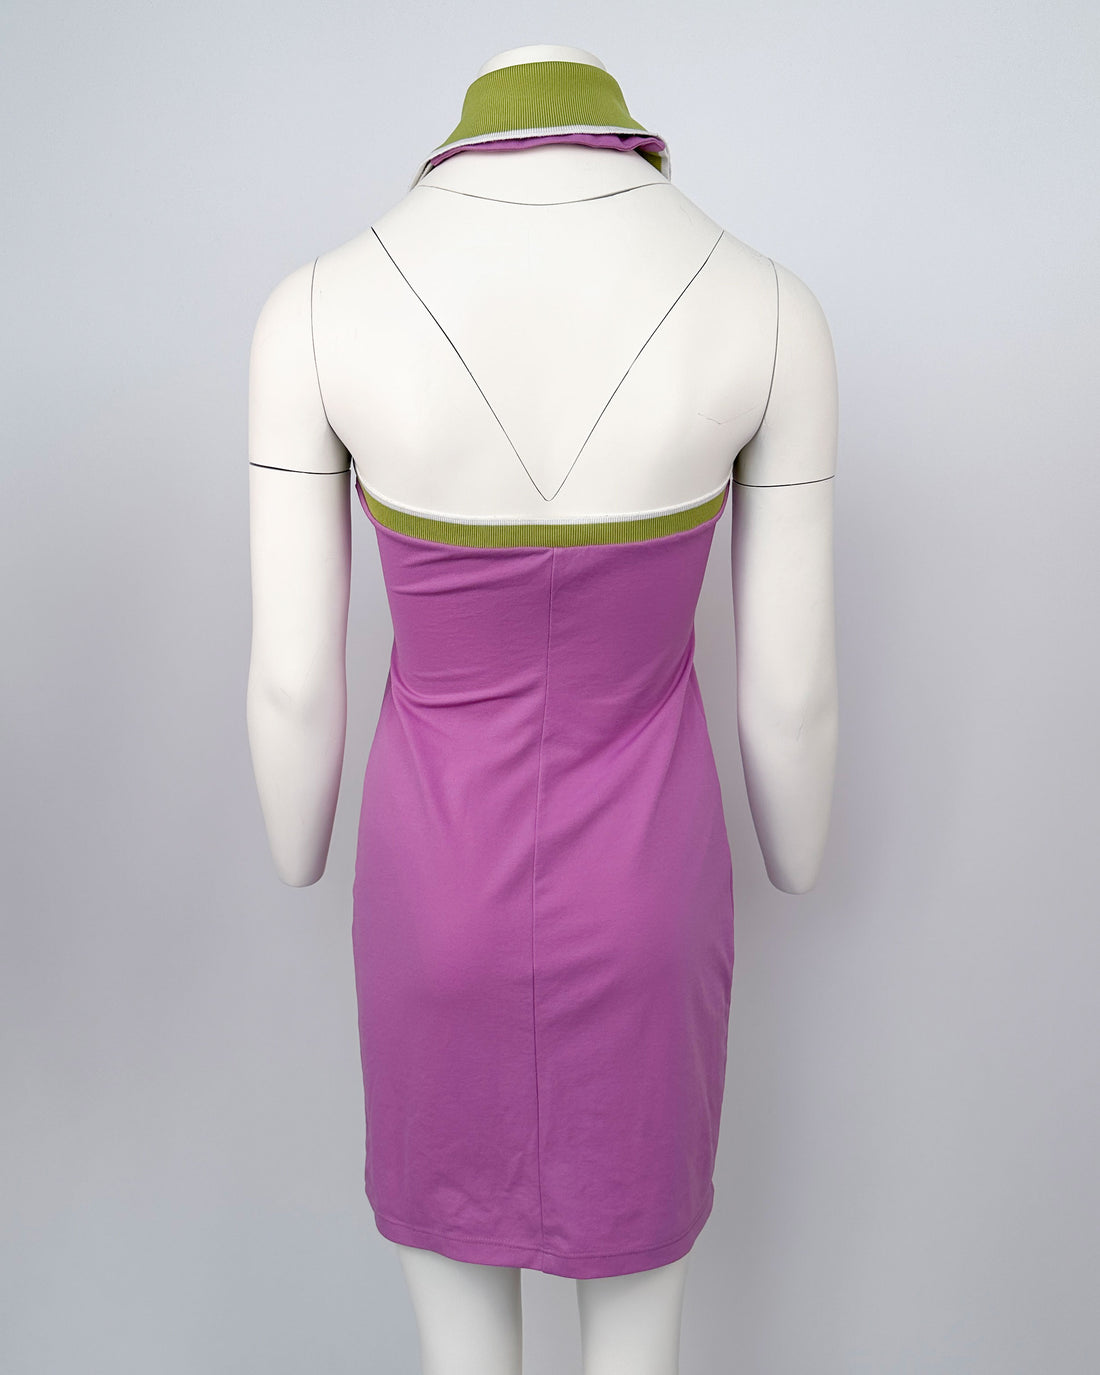 Versace Tennis-Style Open Back Dress 1990's